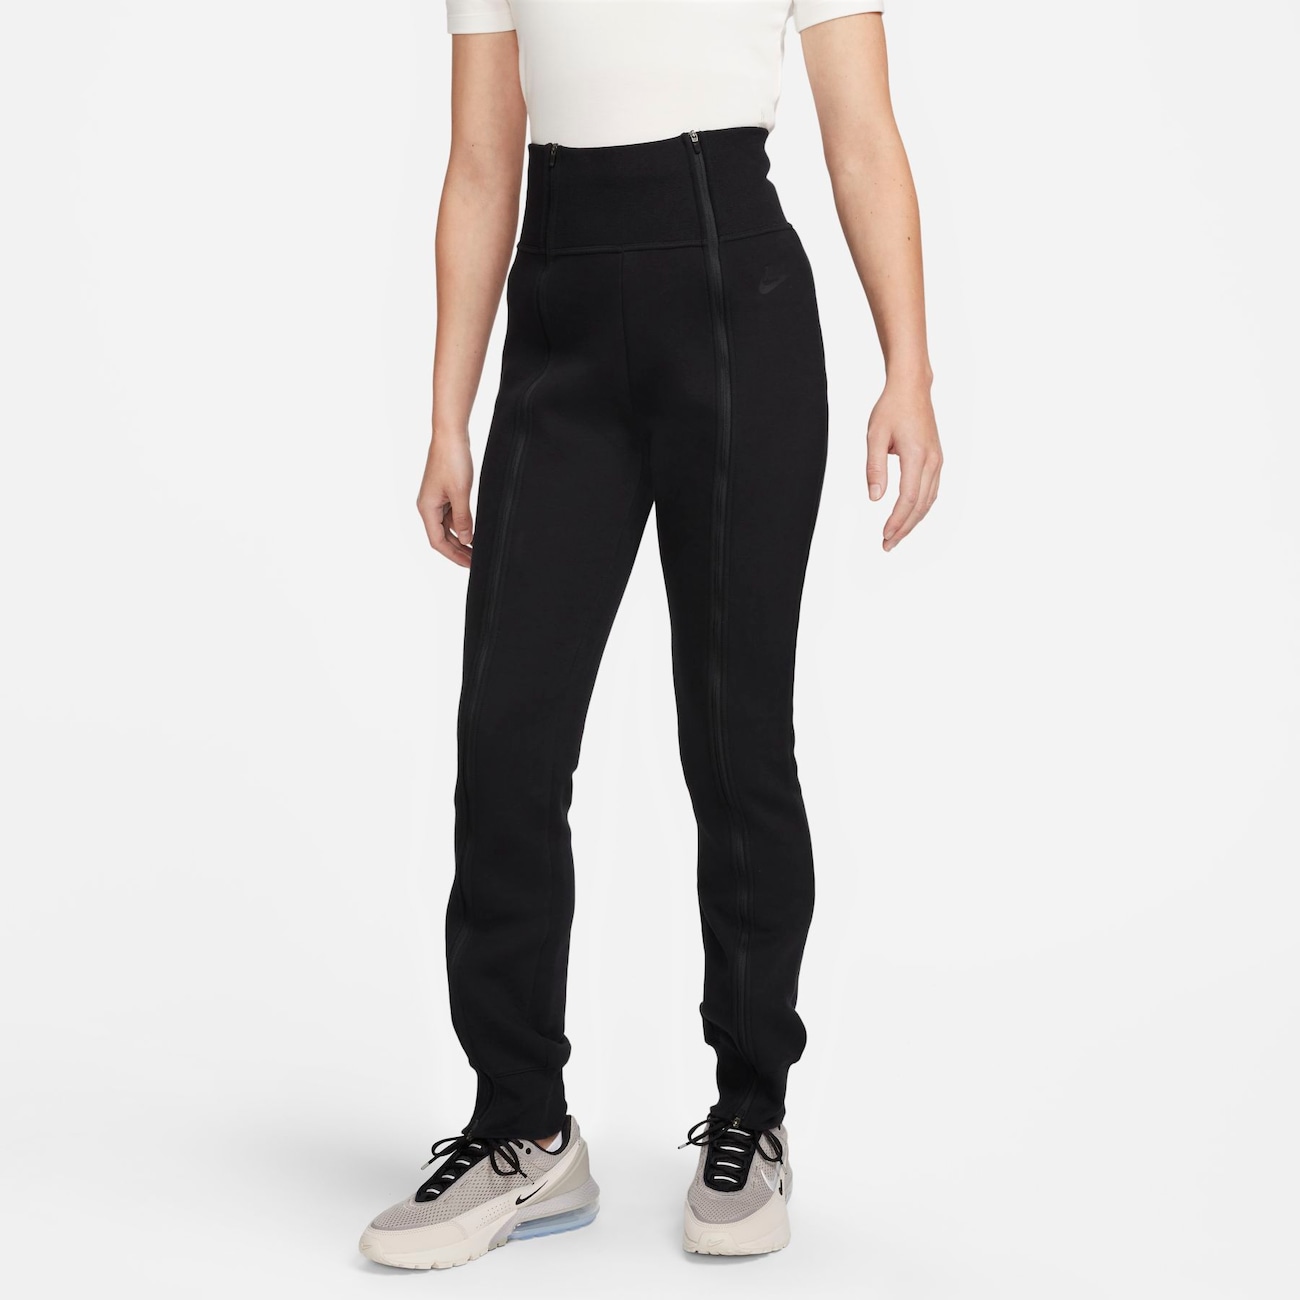 Calça Nike Sportswear Tech Fleece Feminina - Compre Agora